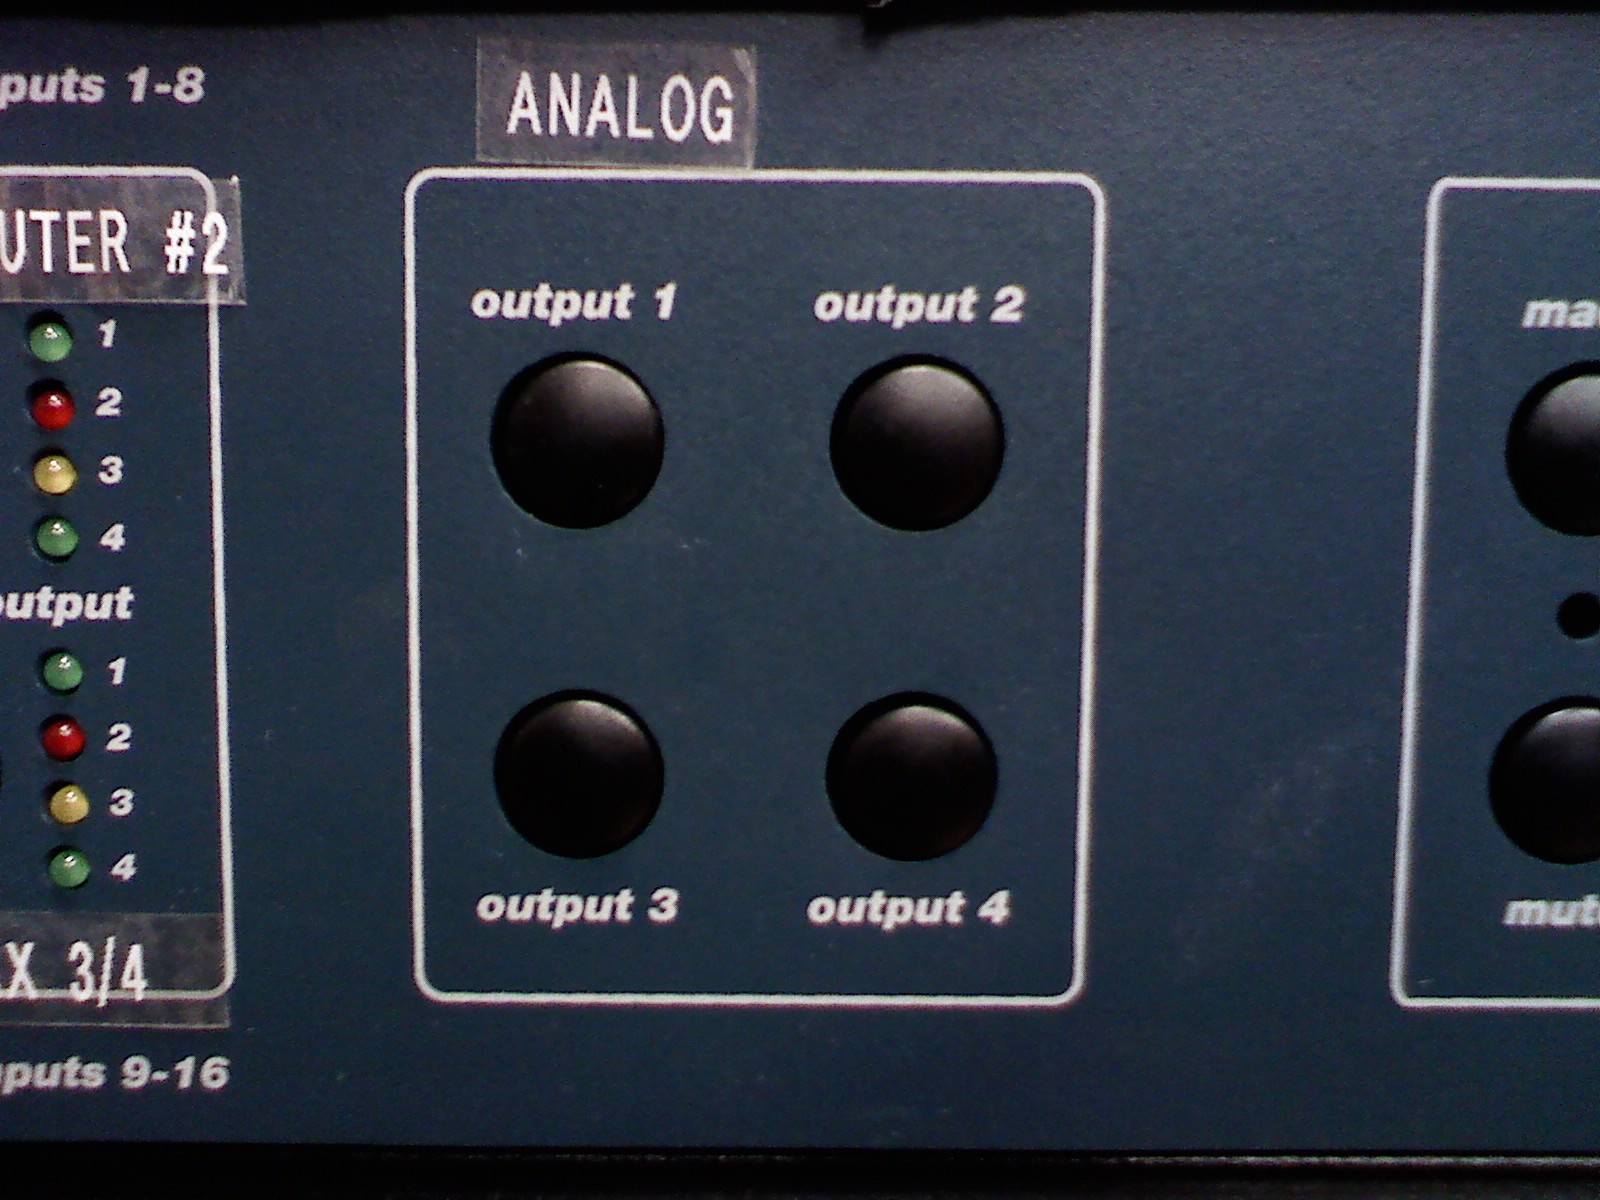 FM Audio Switcher - The Blue Box